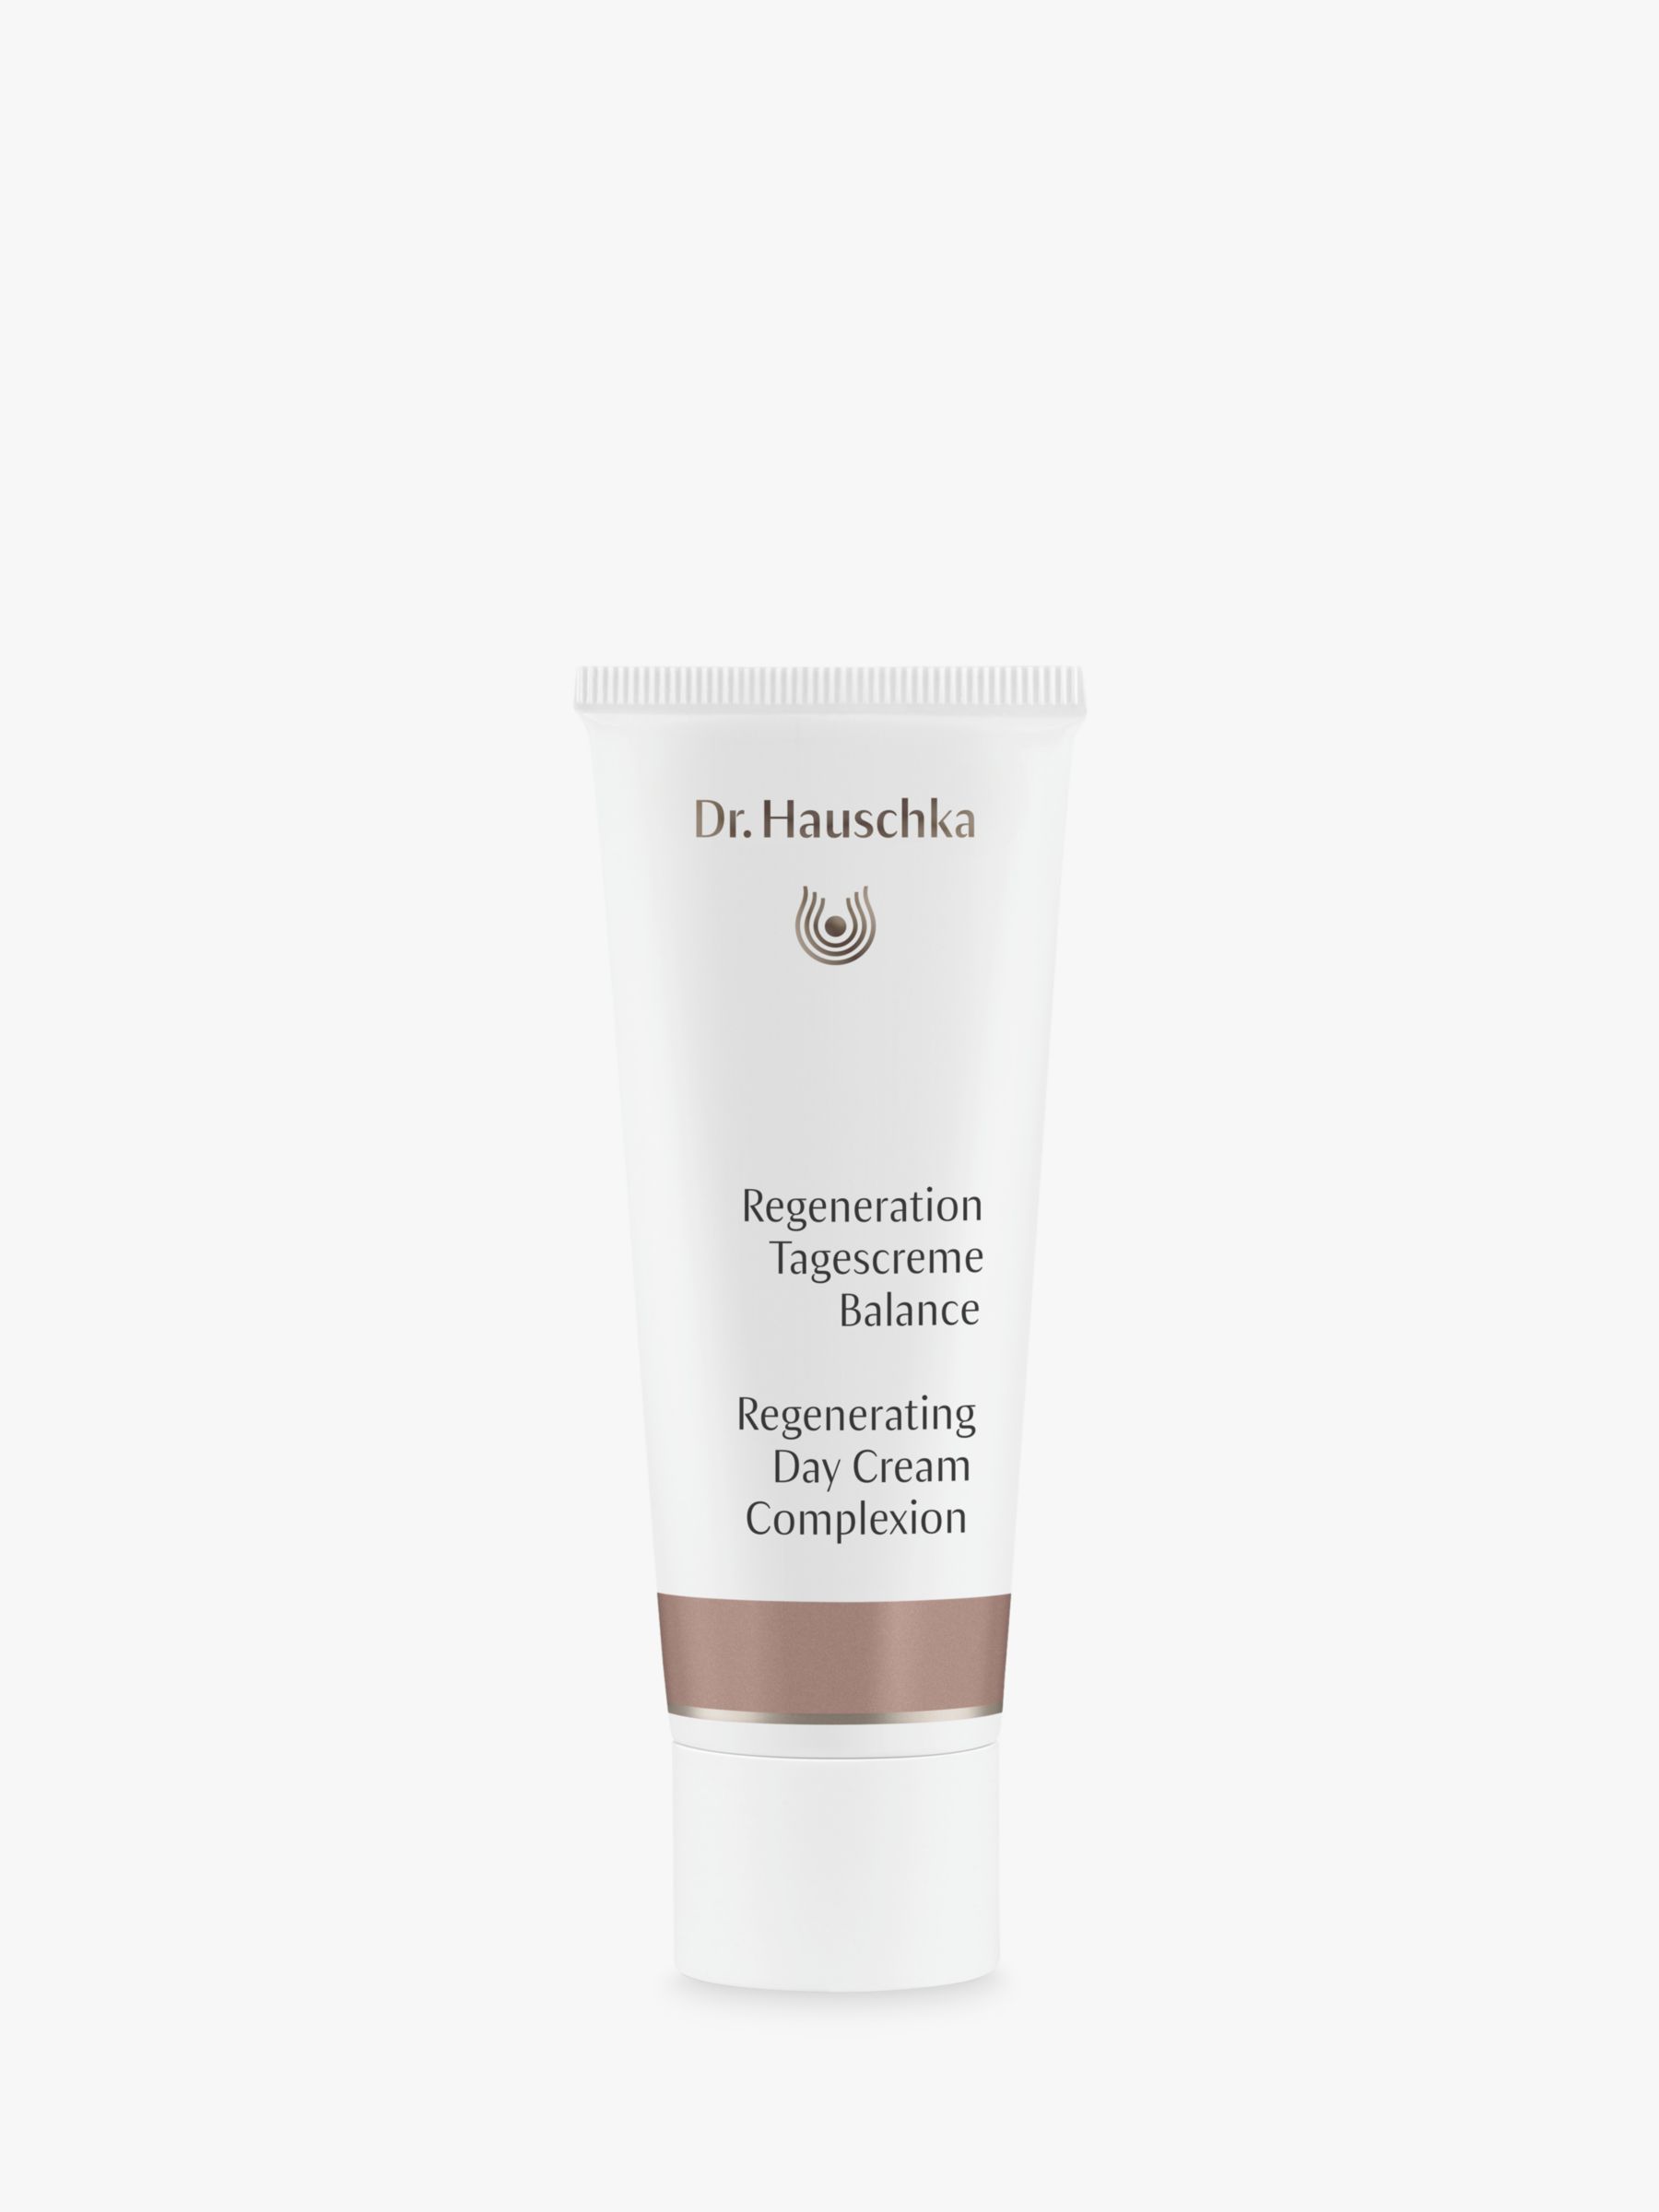 Dr Hauschka Regenerating Day Cream Complexion, 40ml